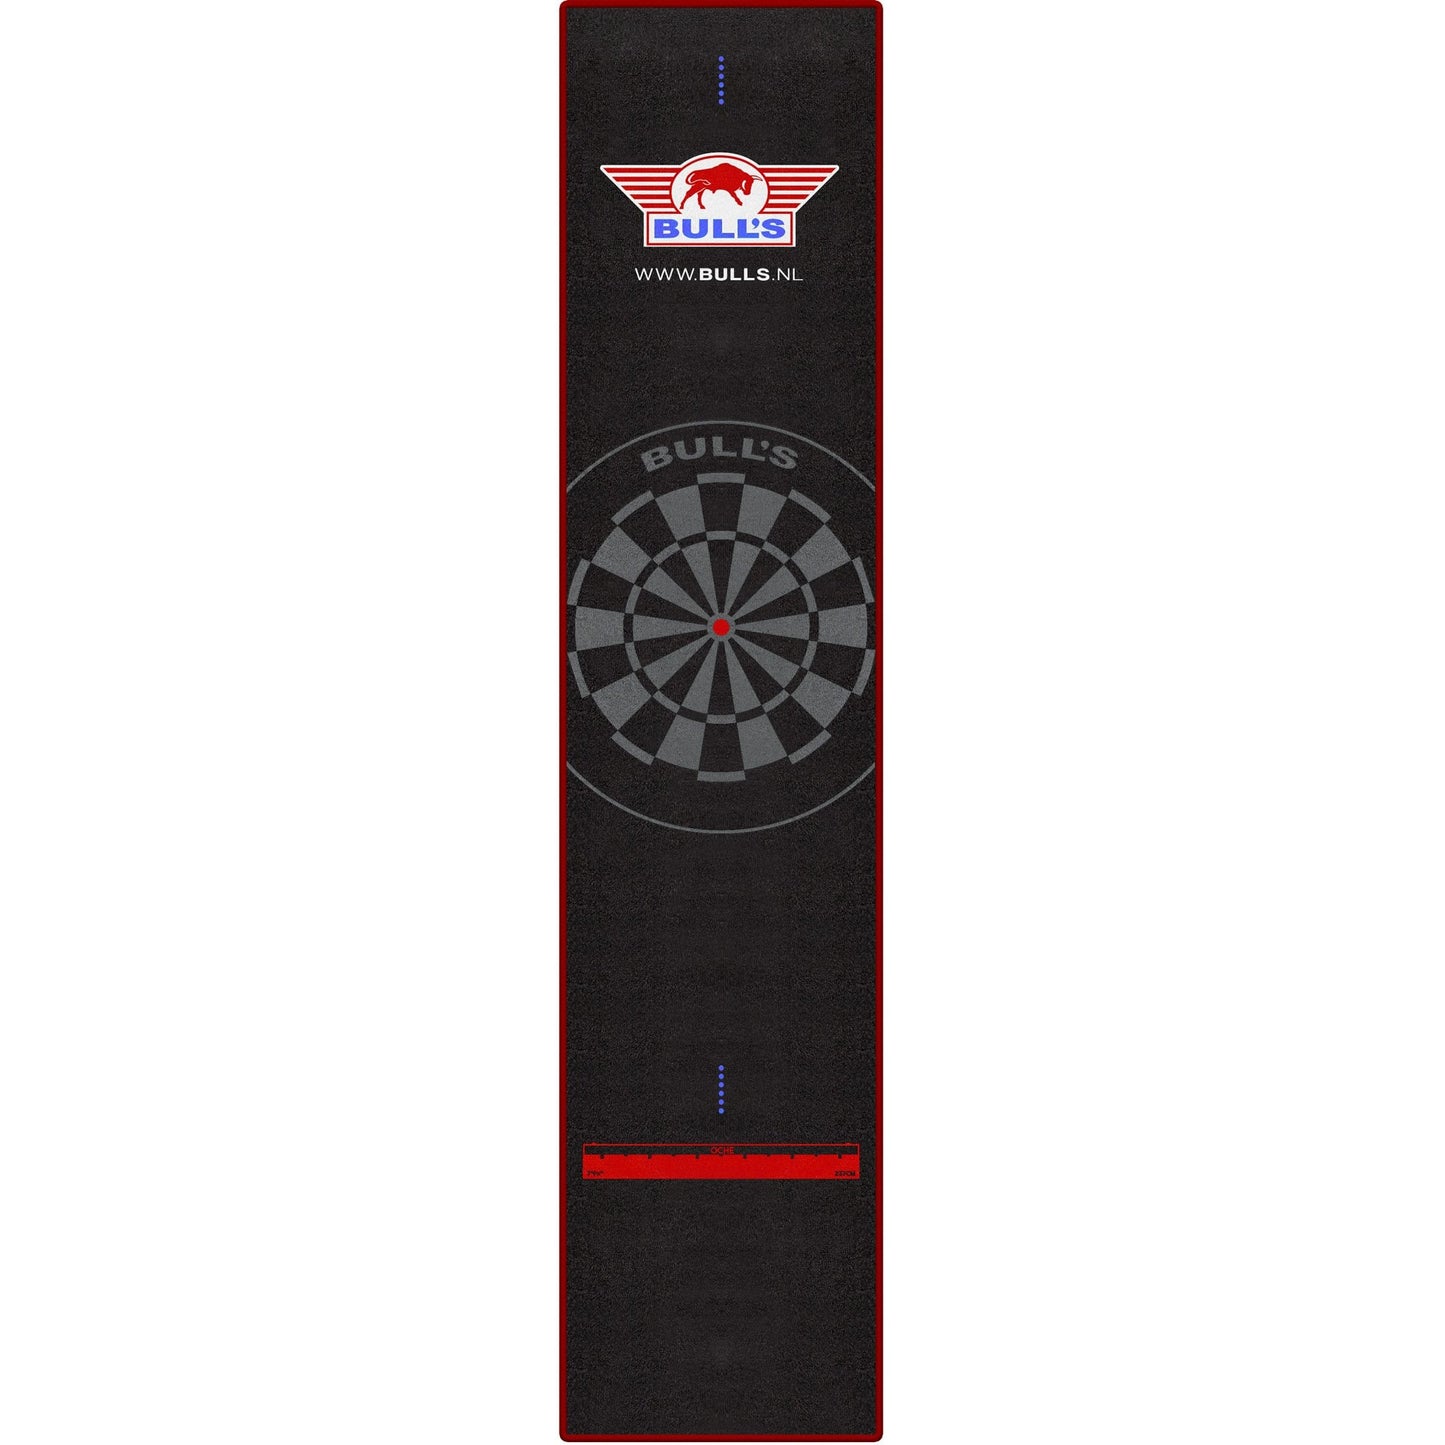 Darts Mat - Bulls Carpet Darts Mat - Black or Red Border - 300cm X 65cm